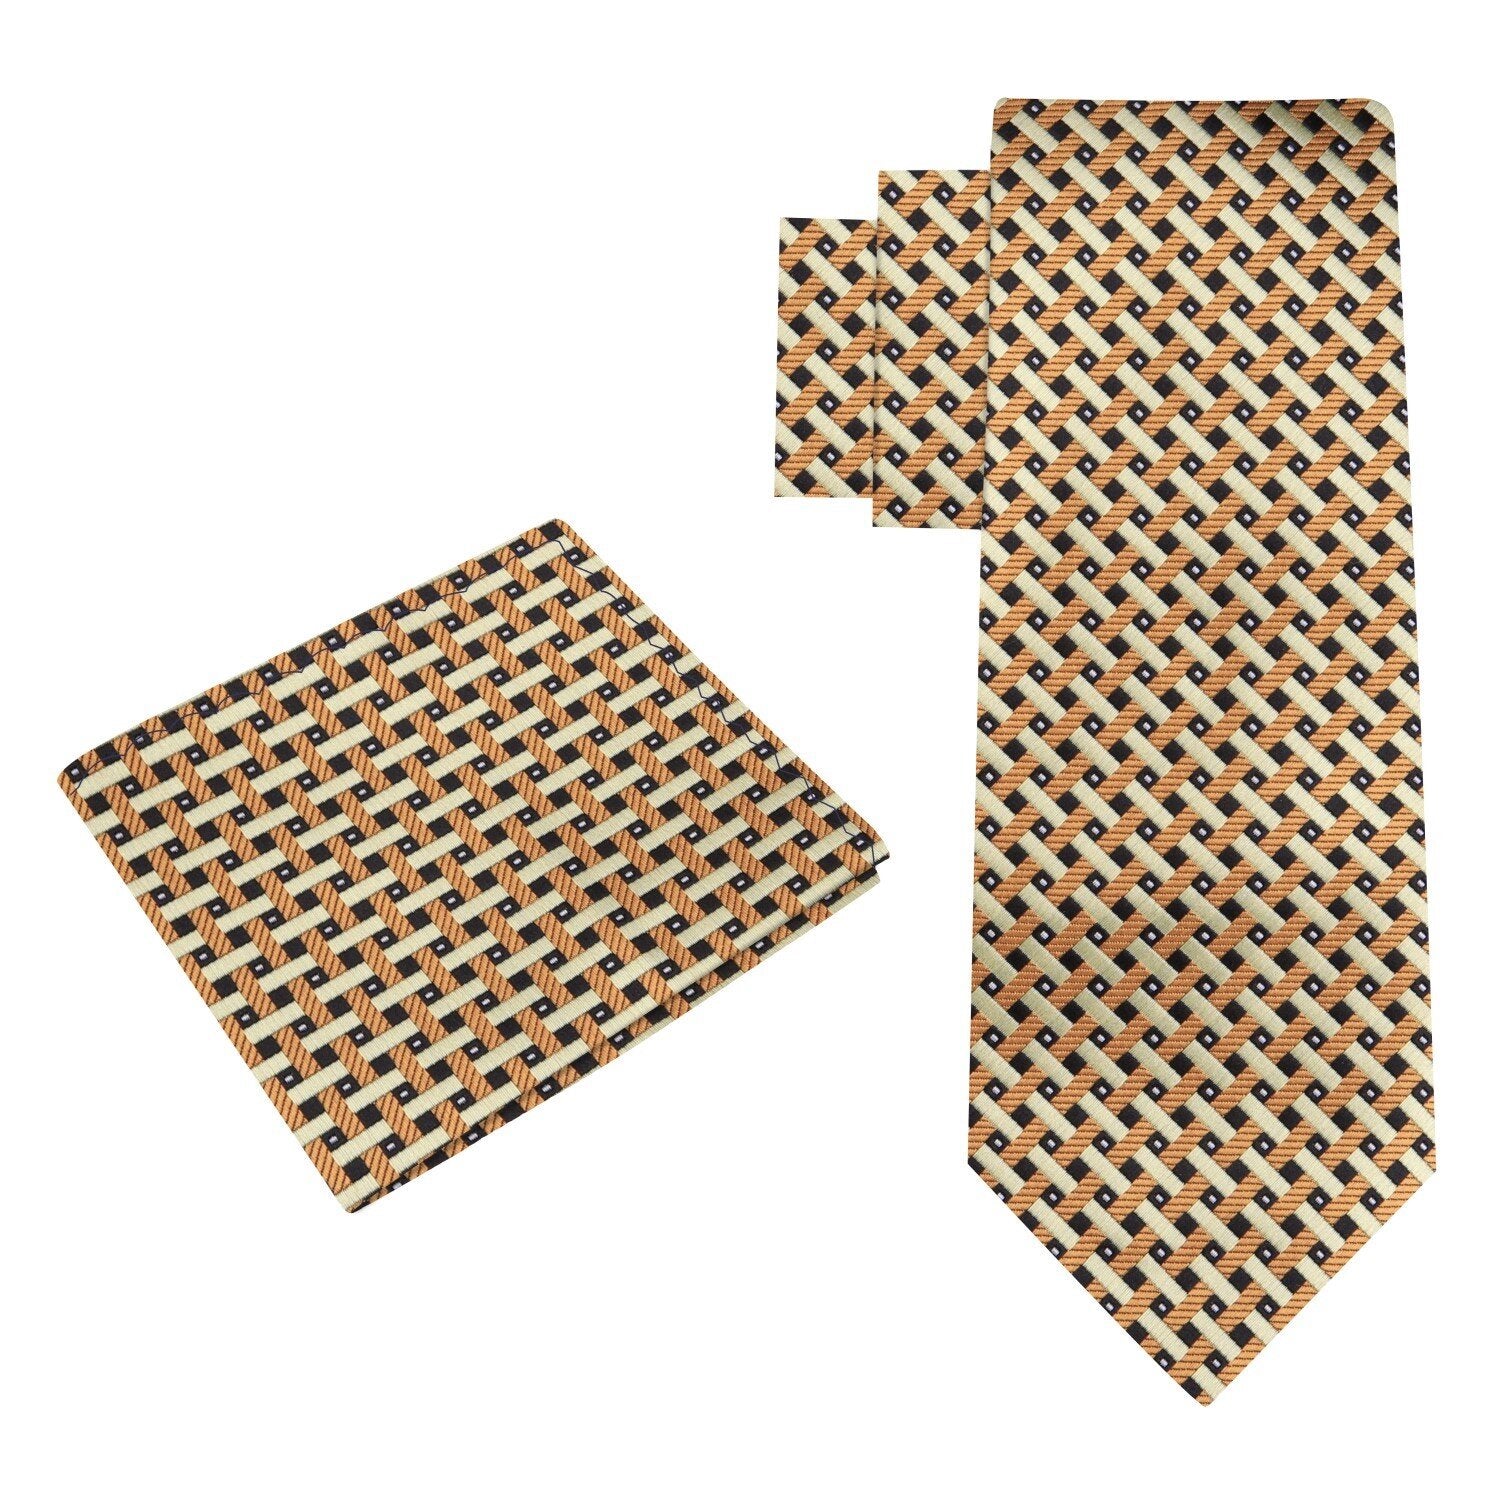 Alt View: Gold, Black Geometric Tie and Pocket Square